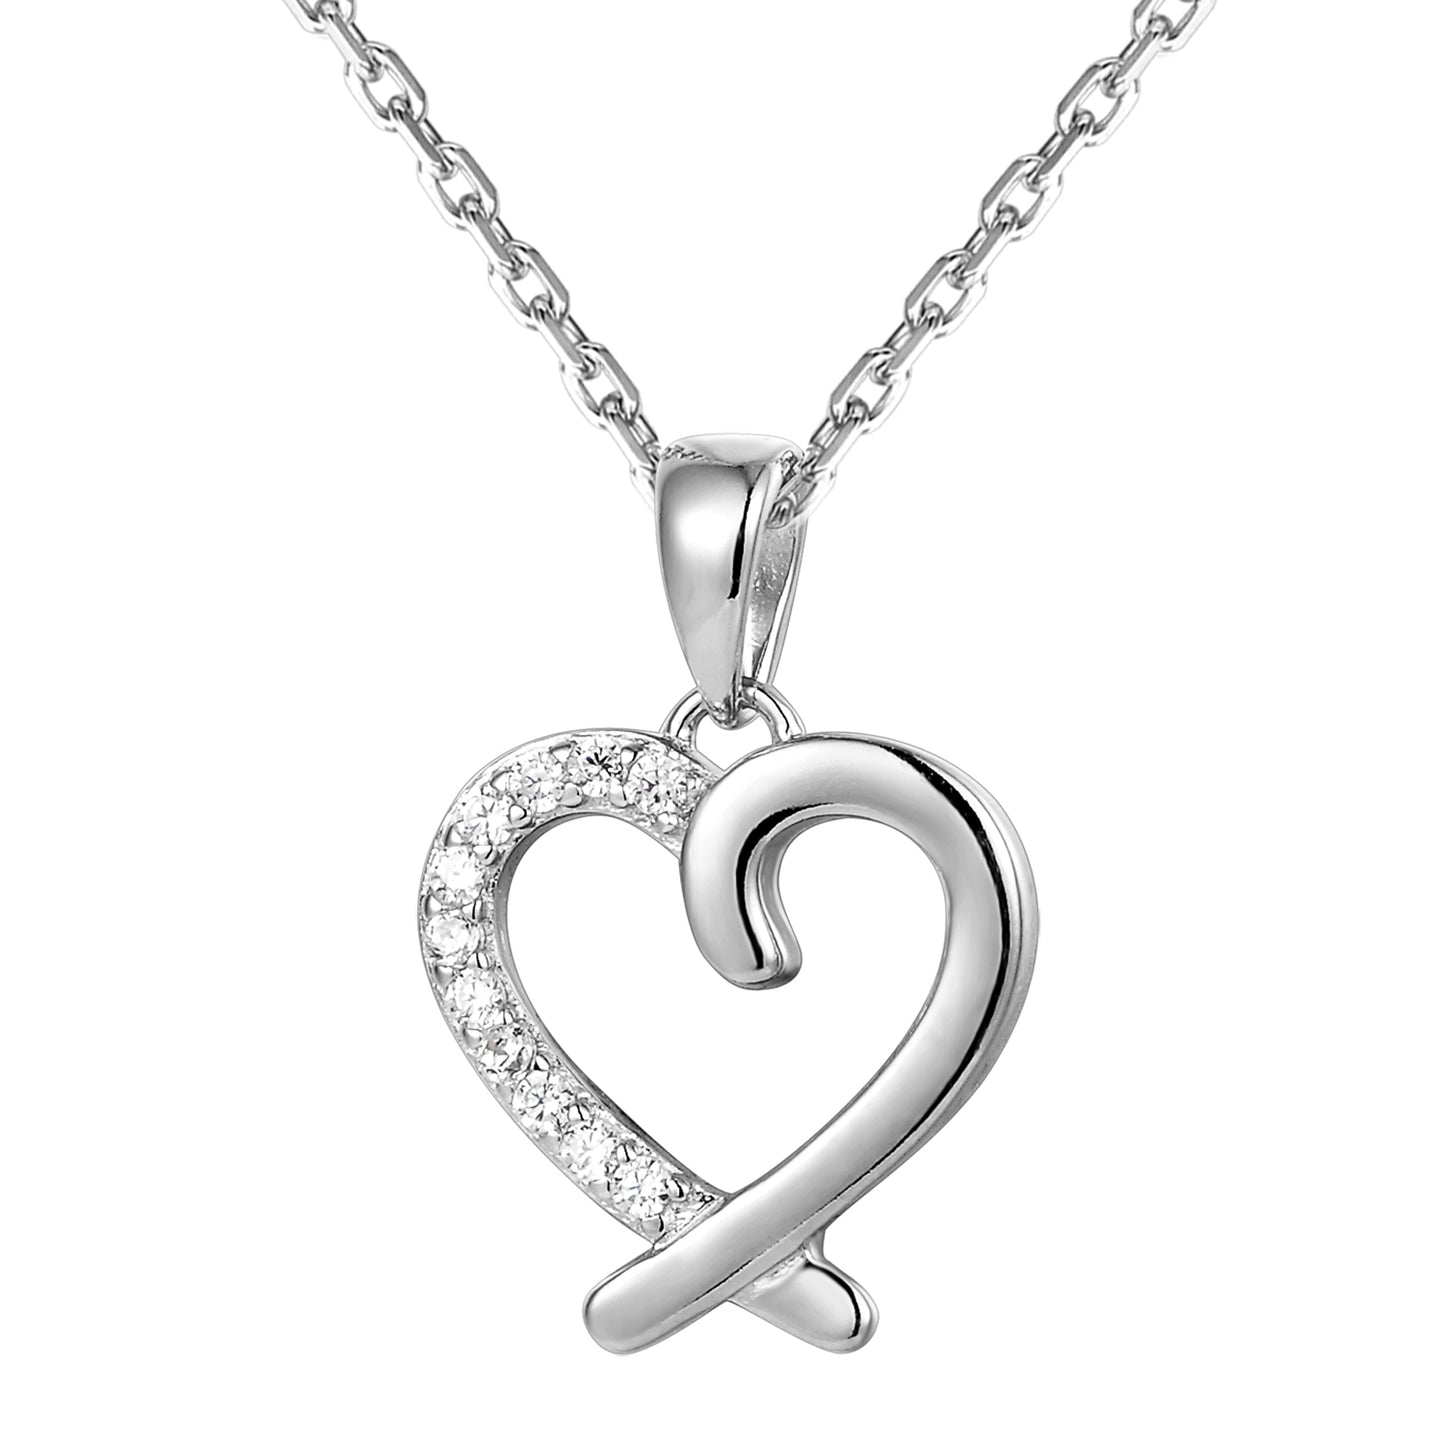 Designer Solitaire Women's Love Heart Pendant Chain Set